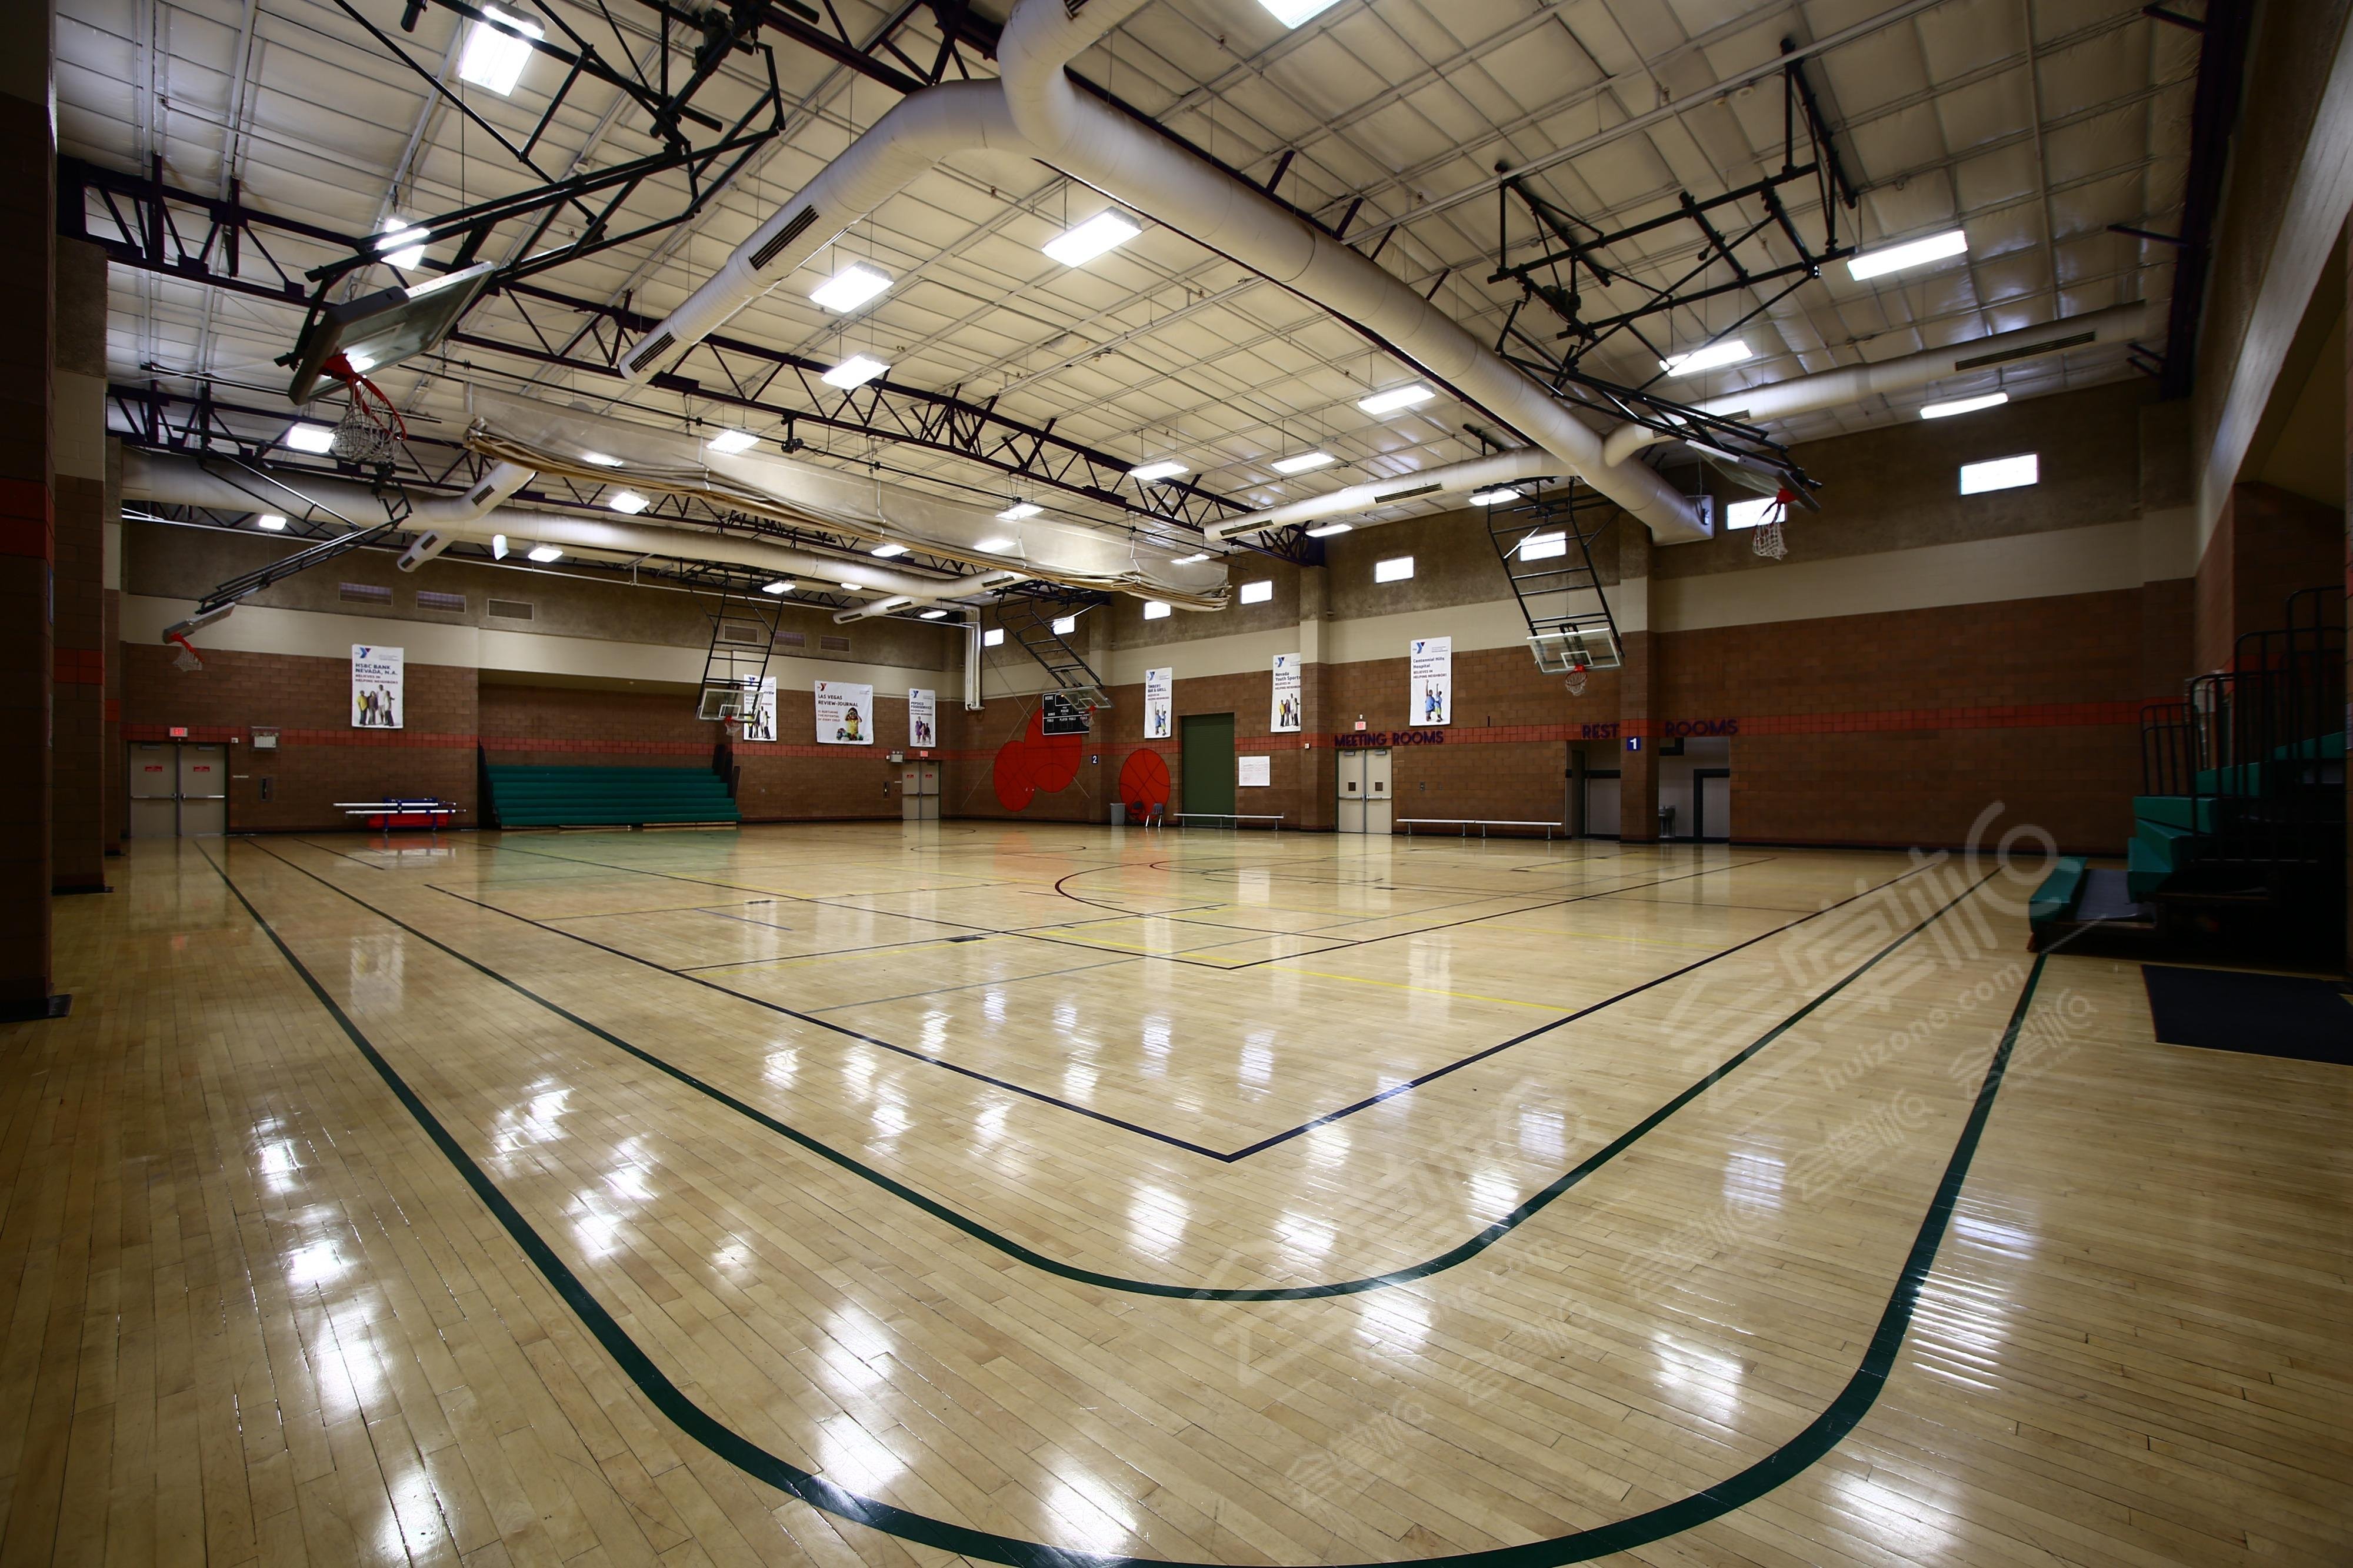 Amazing Gymnasium For Large Get-Togethers